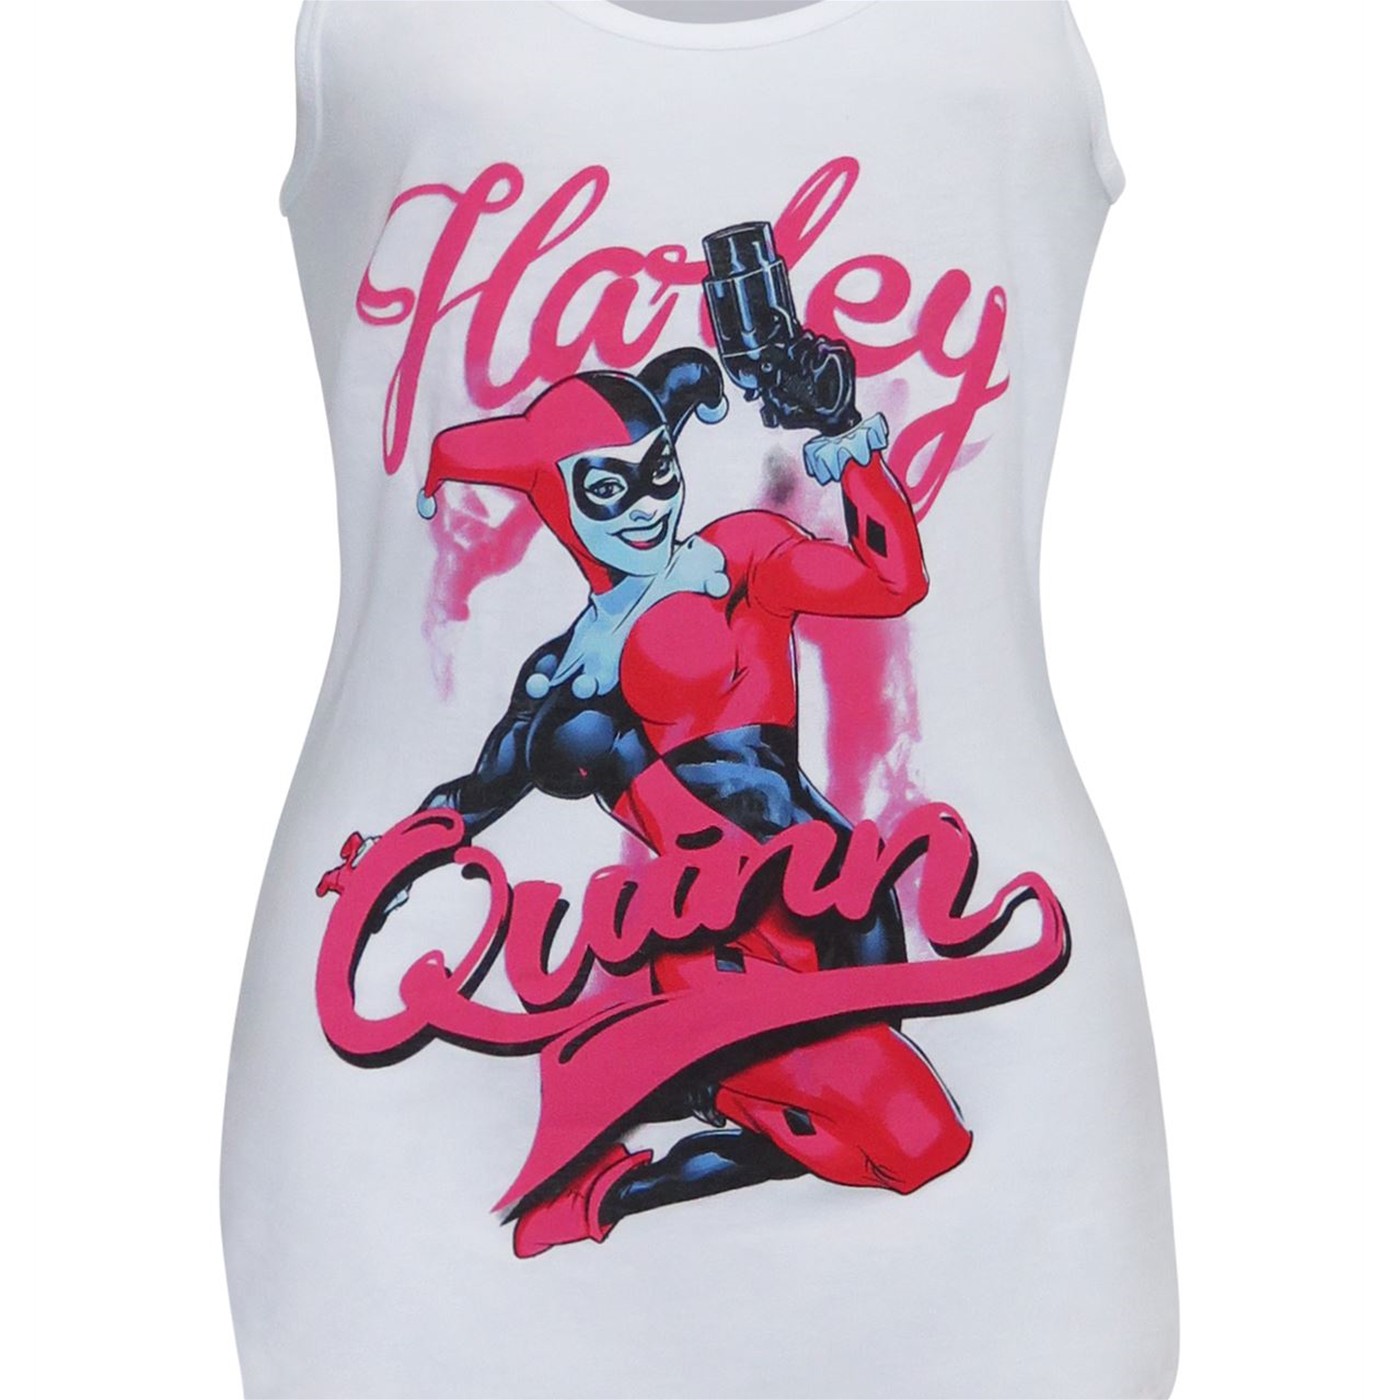 Harley Quinn Classic Racerback Women's Tank Top